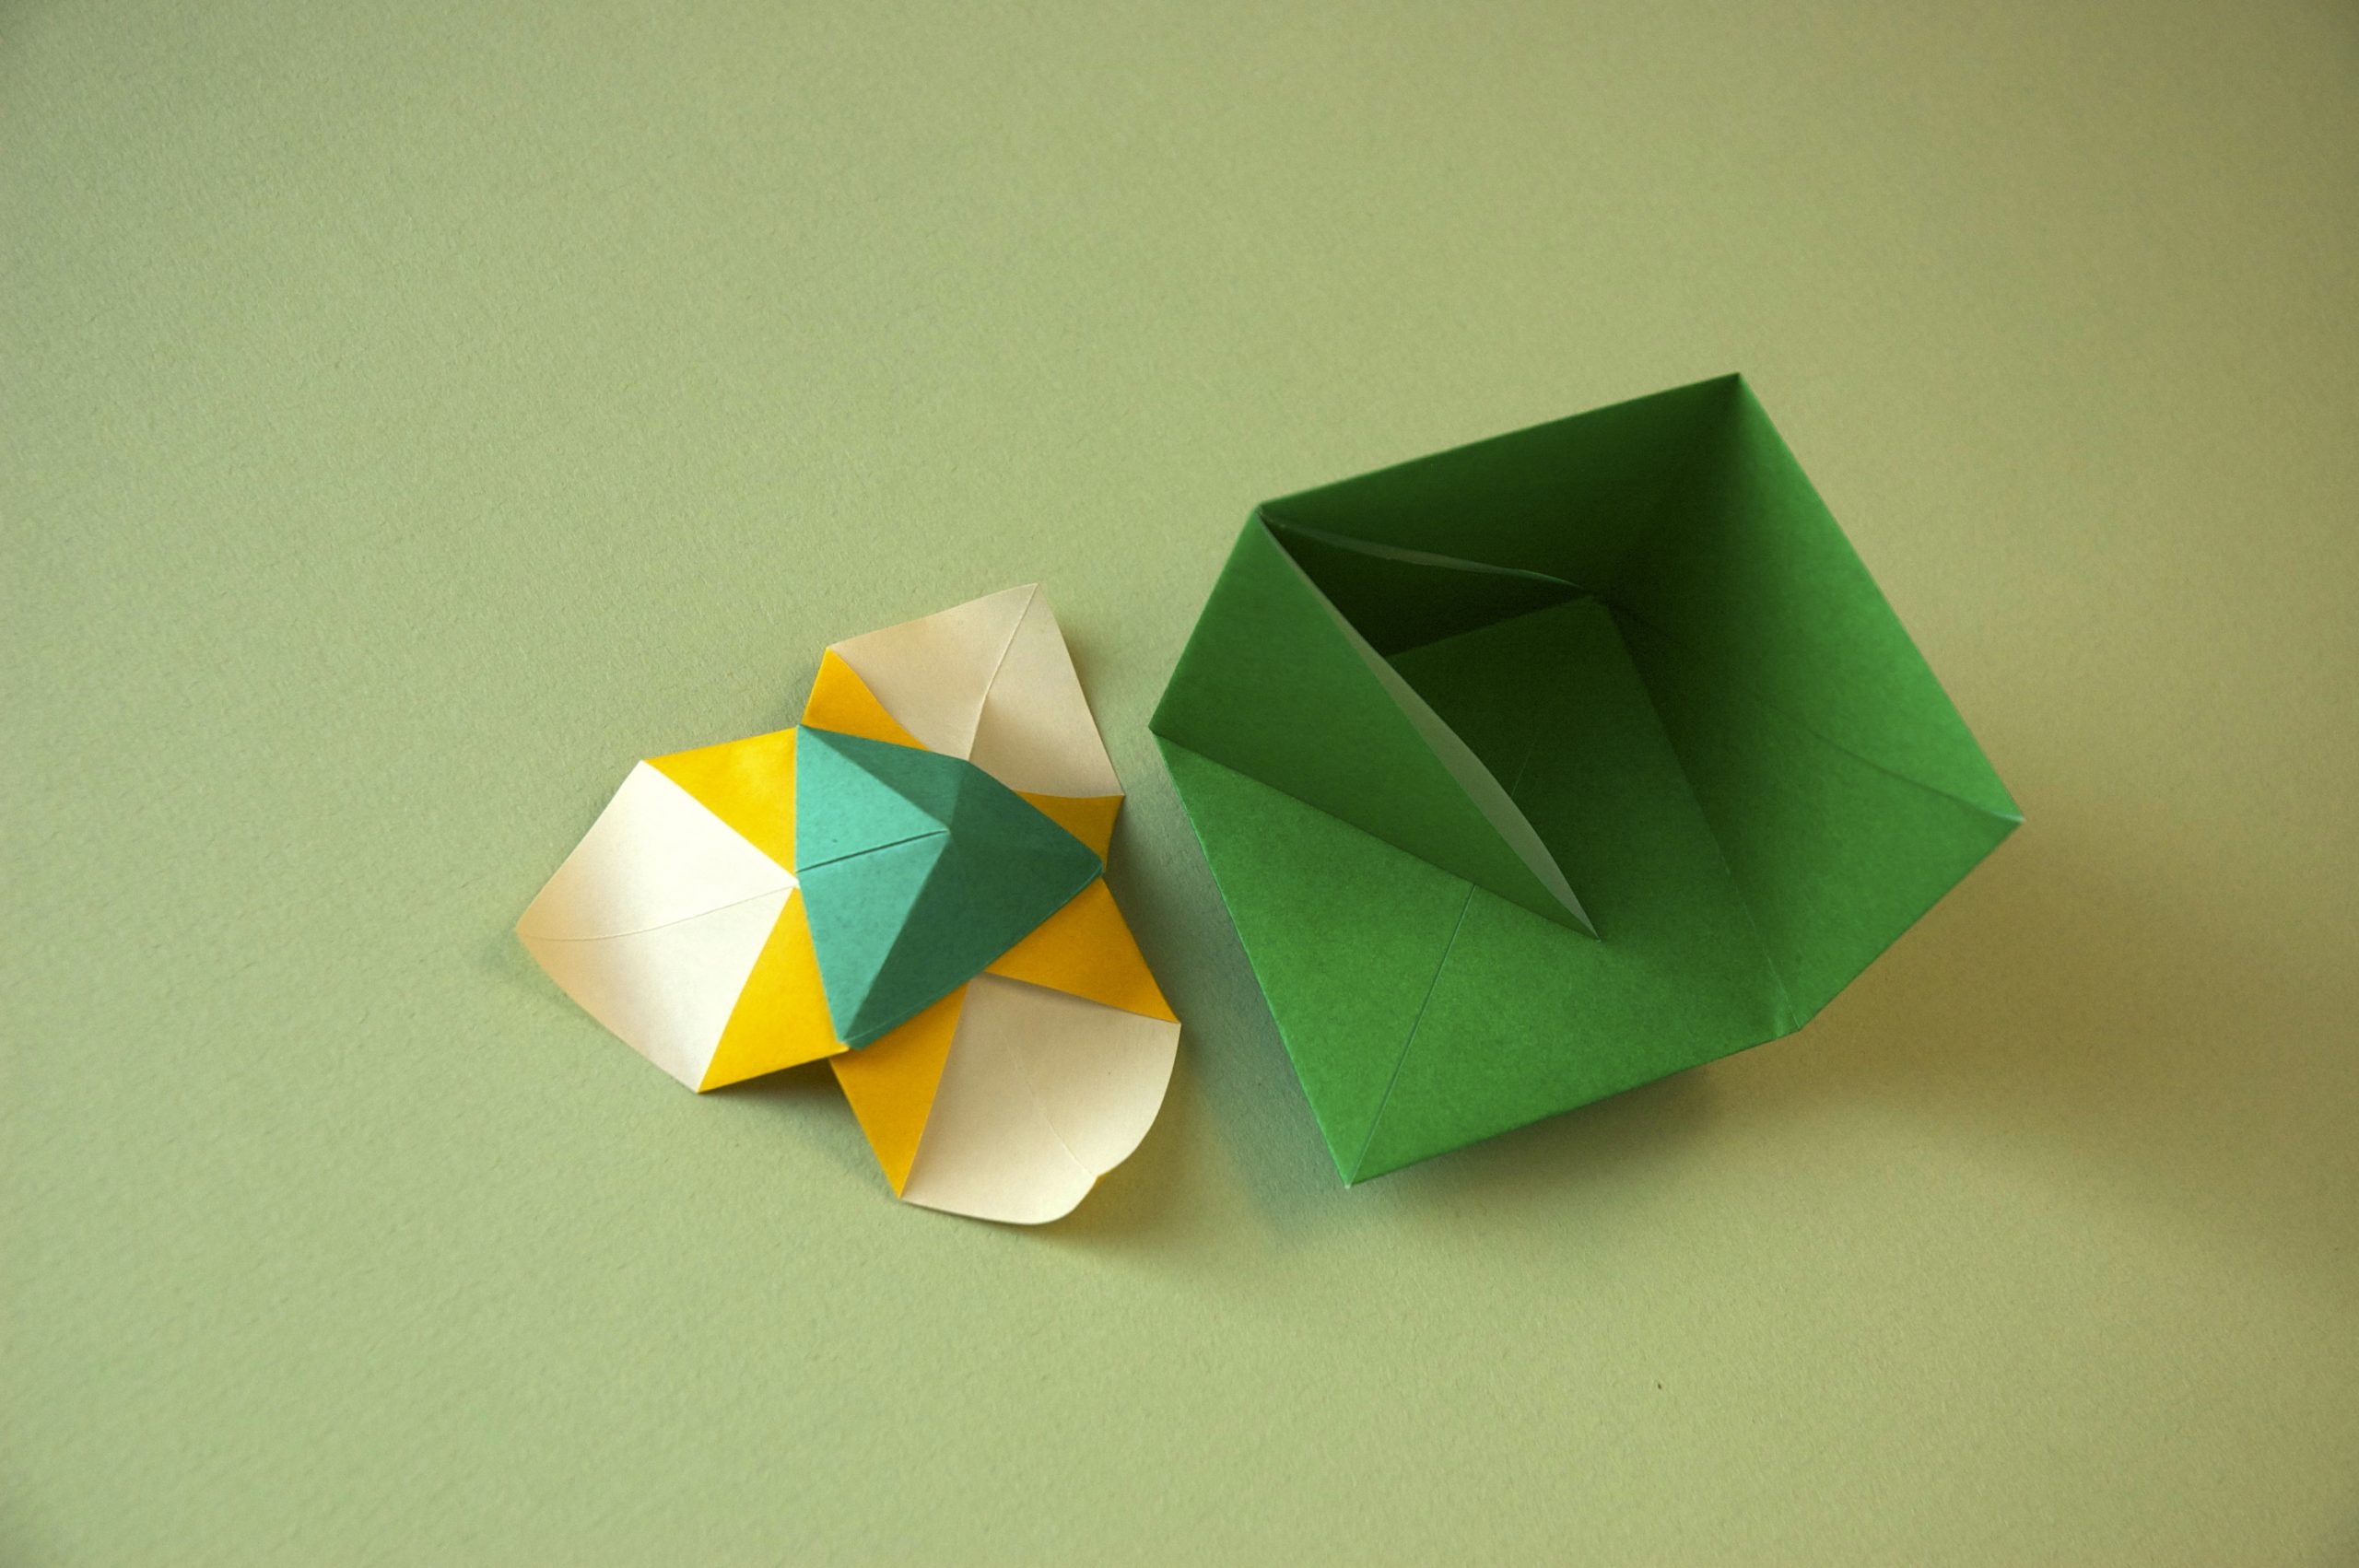 Lafosse & Alexander's Origami Flowers Kit: Lifelike Paper Flowers